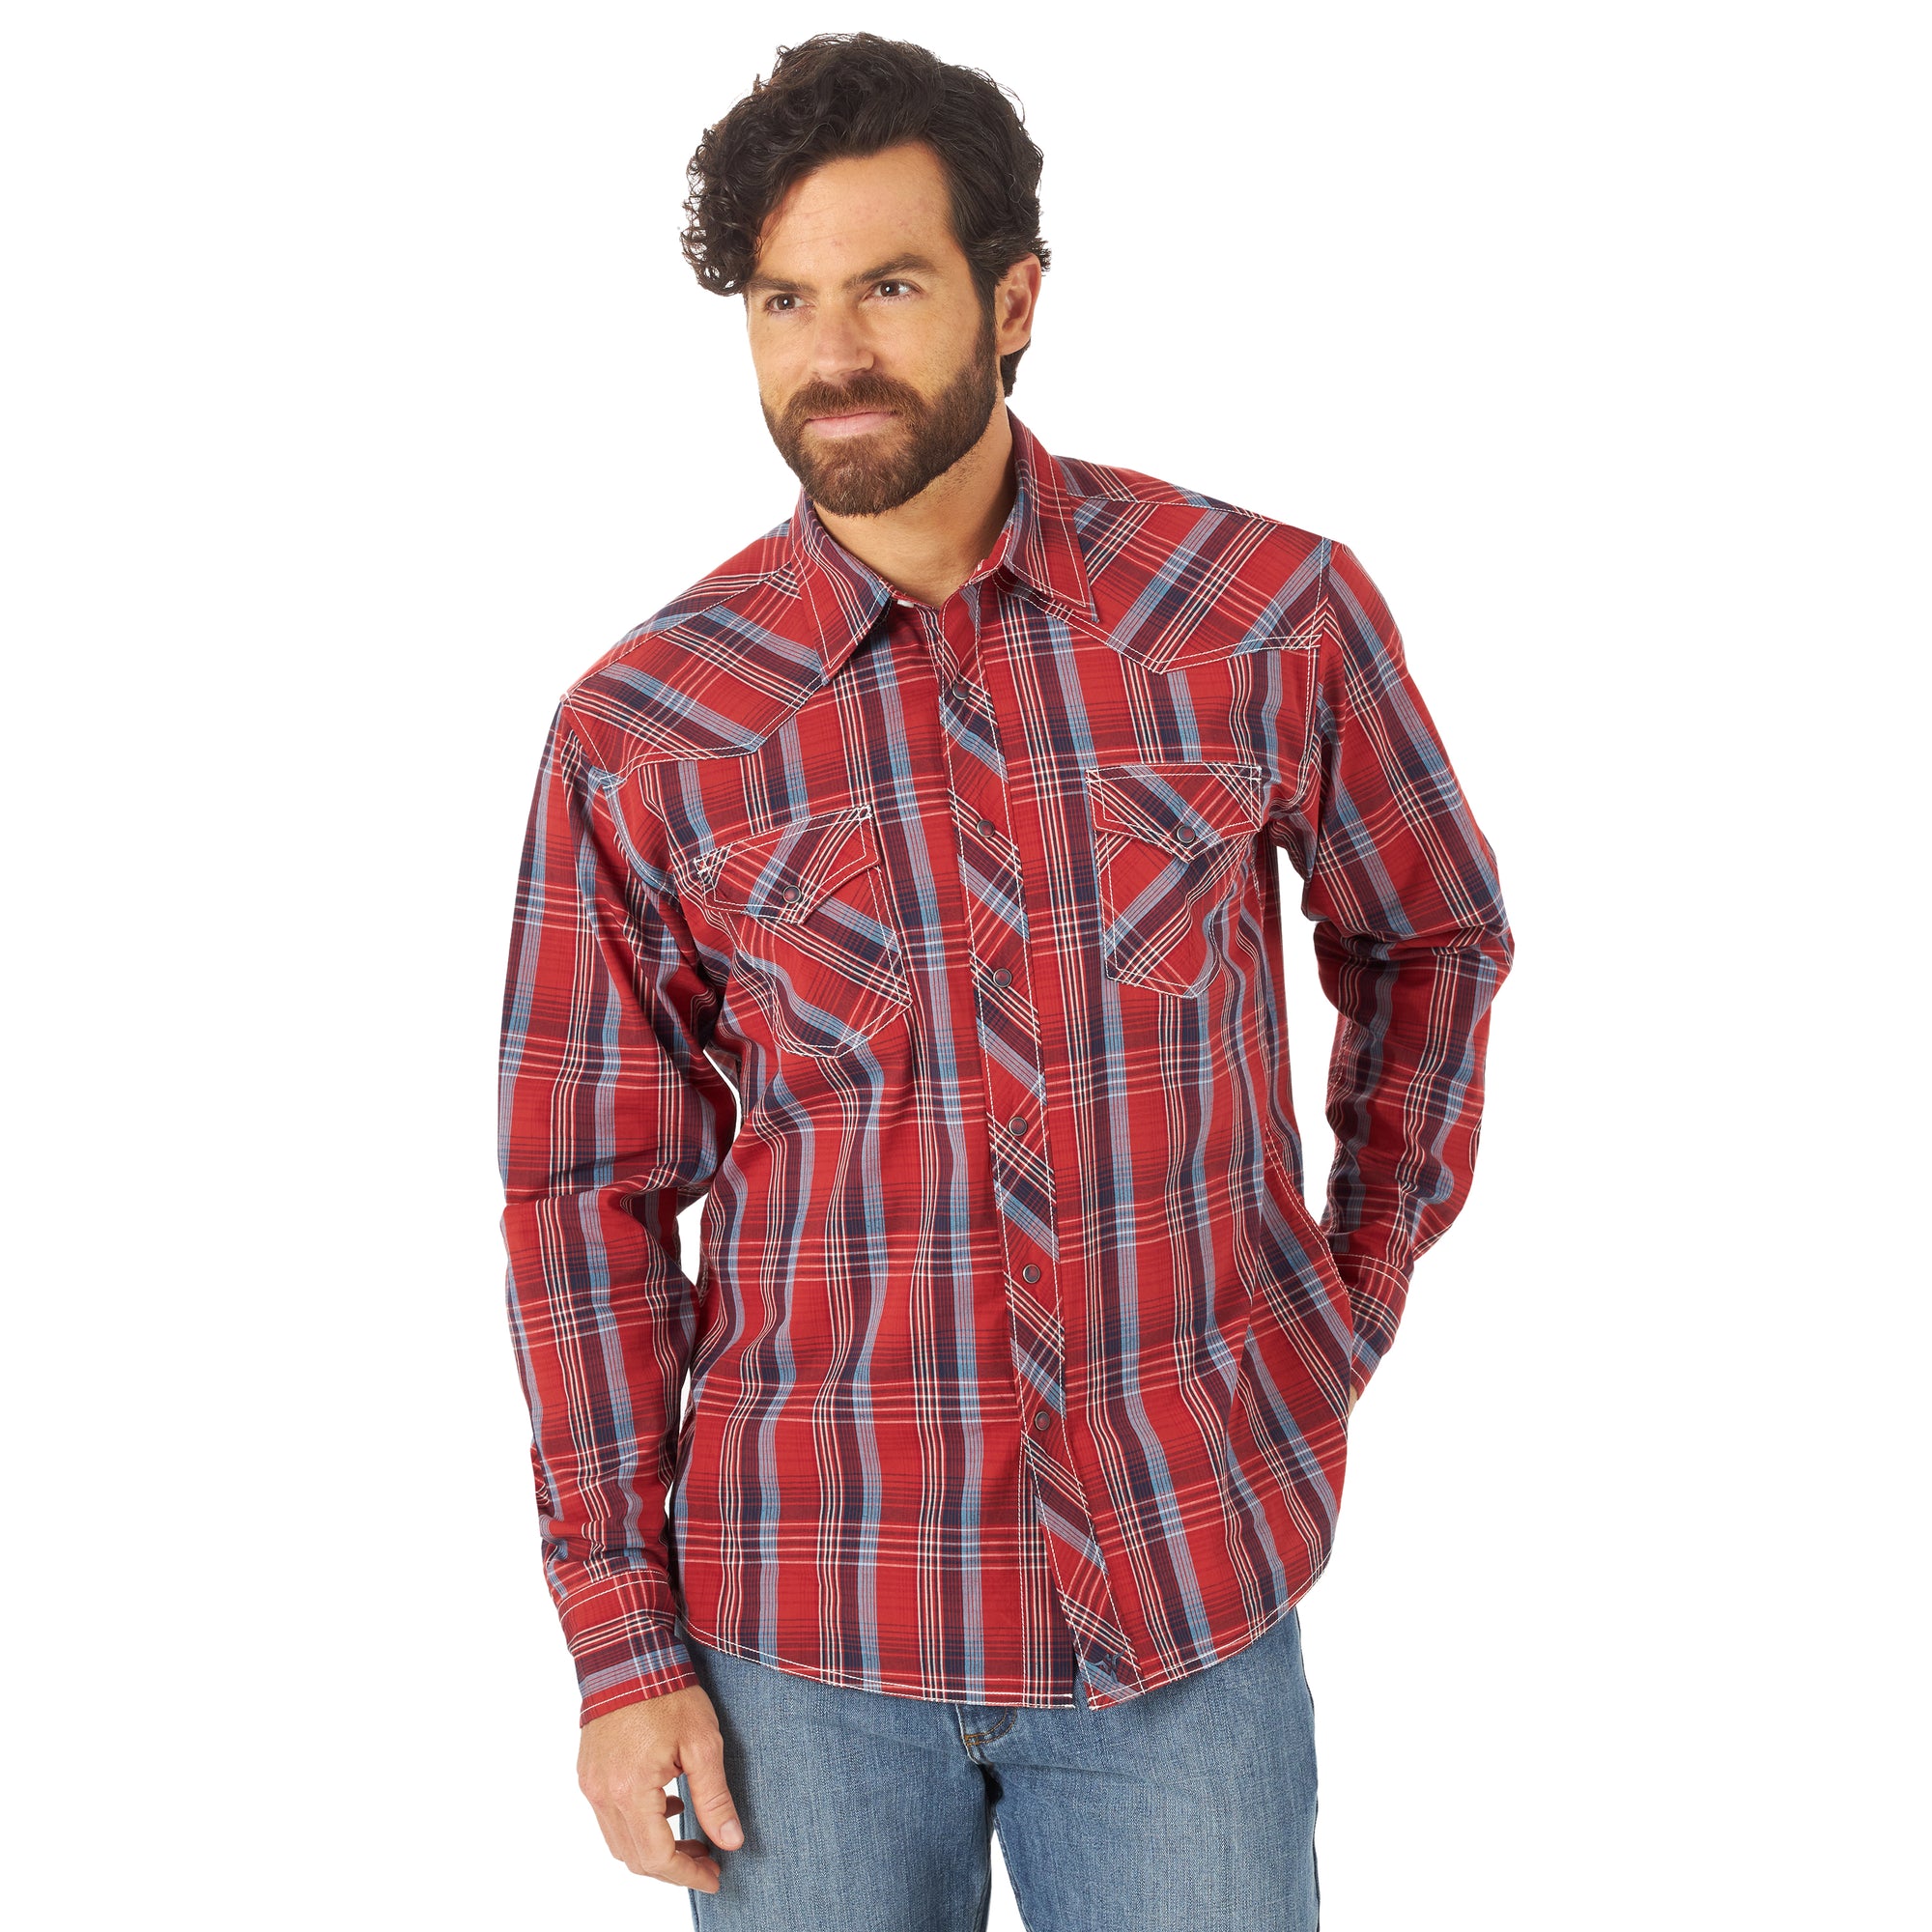 Wrangler Men's 20X Advanced Comfort Snap Shirt Red